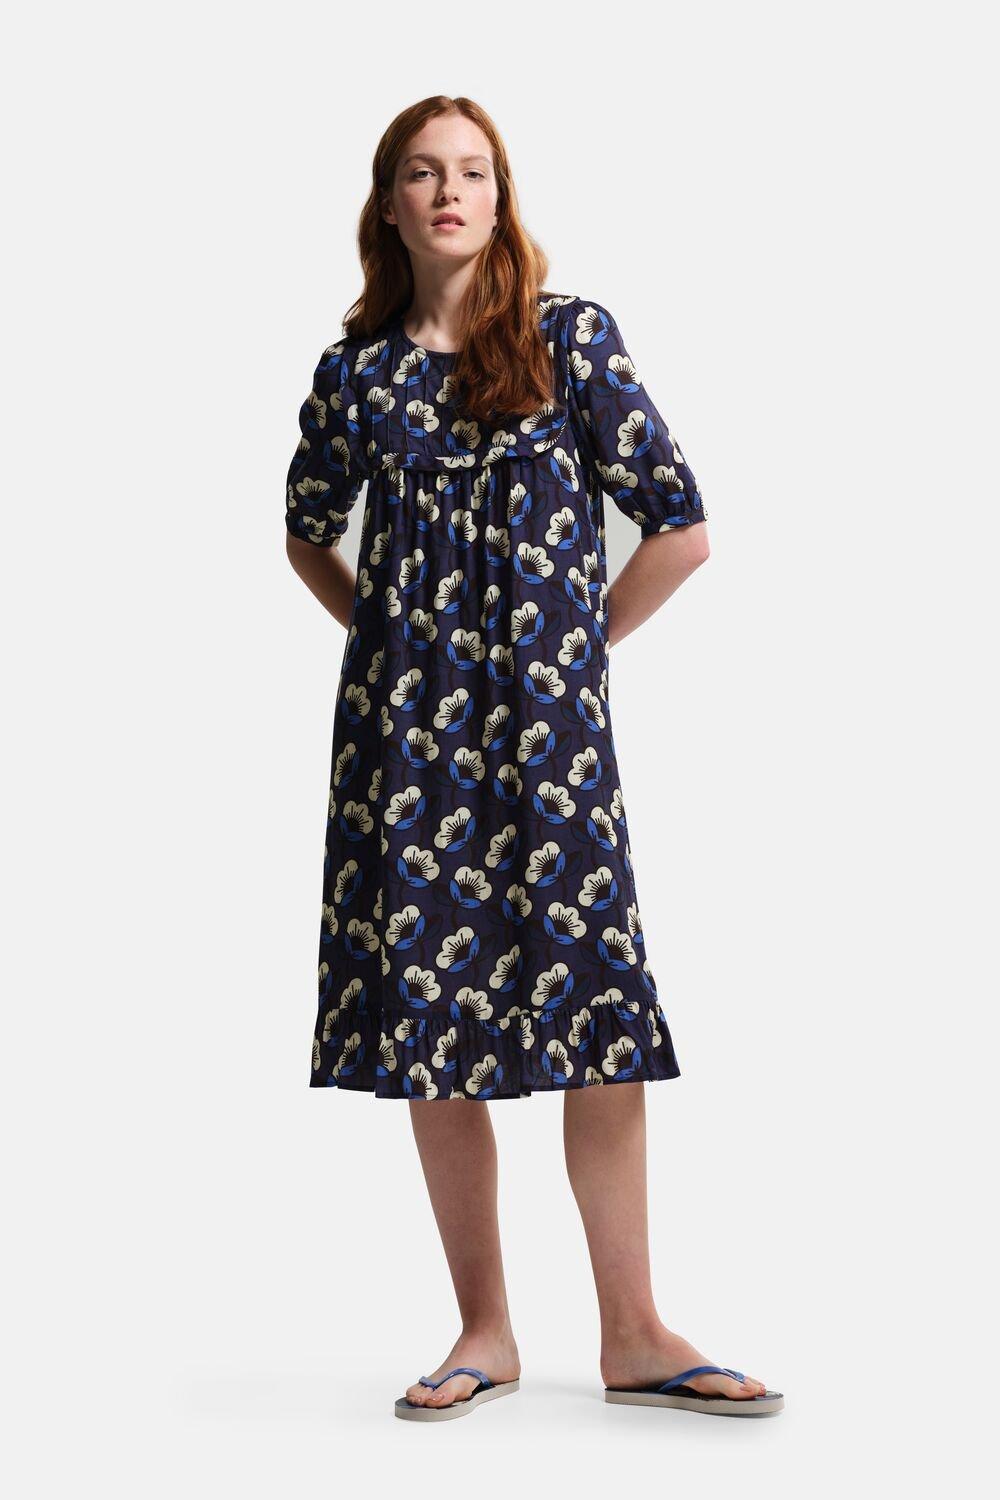 'Orla Kiely' Printed Short Sleeve Dress